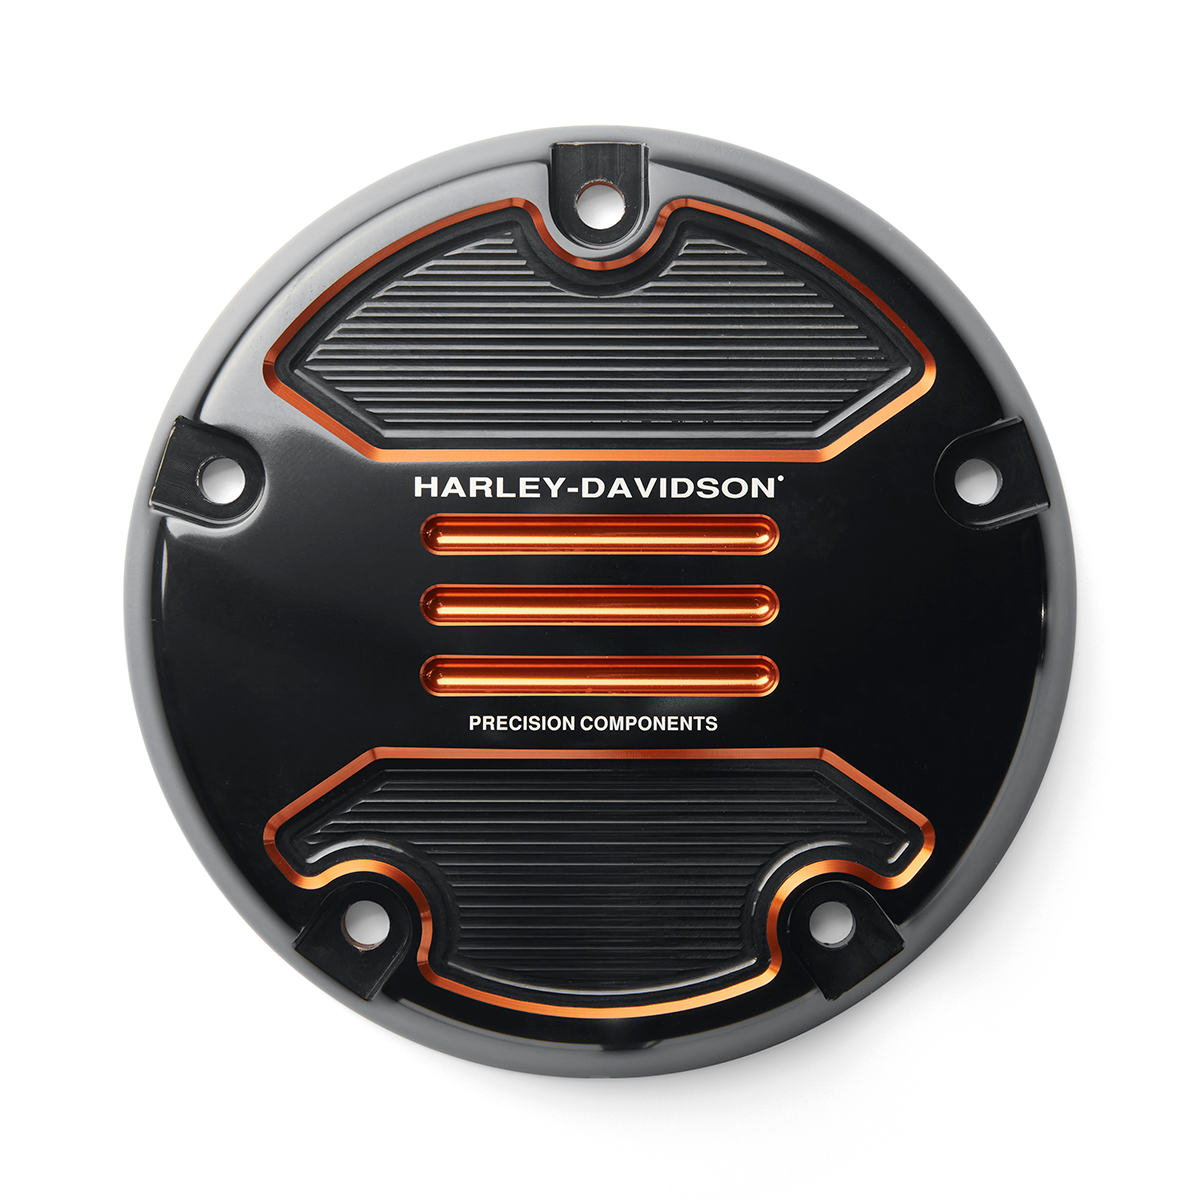 Harley-Davidson Adversary Clutch Medallion